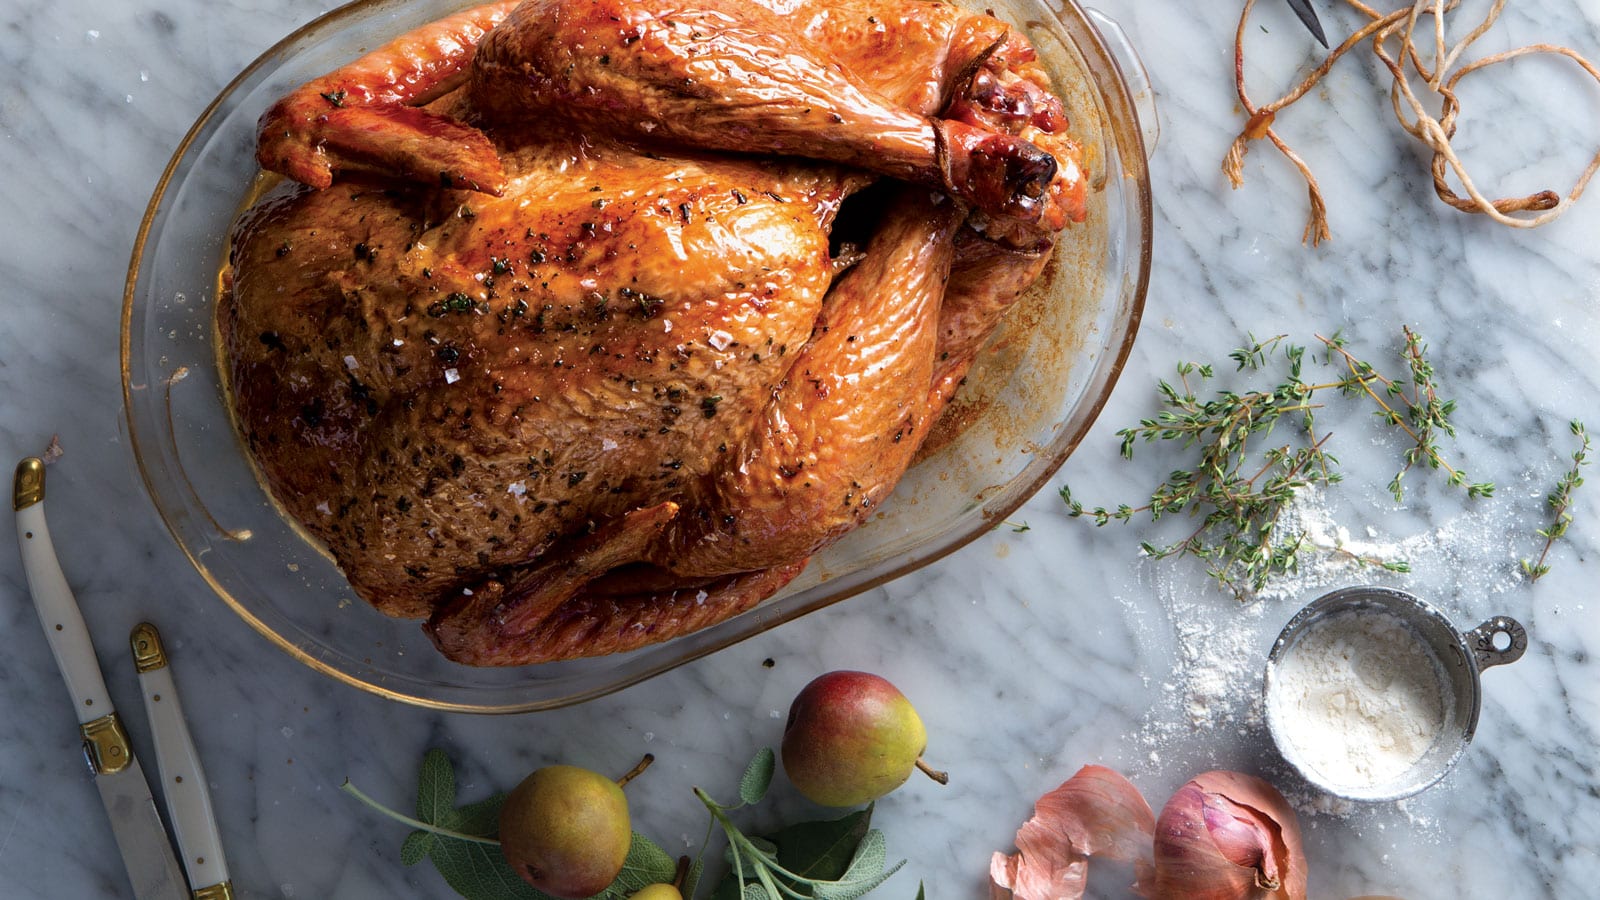 Roasted turkey and ingredients